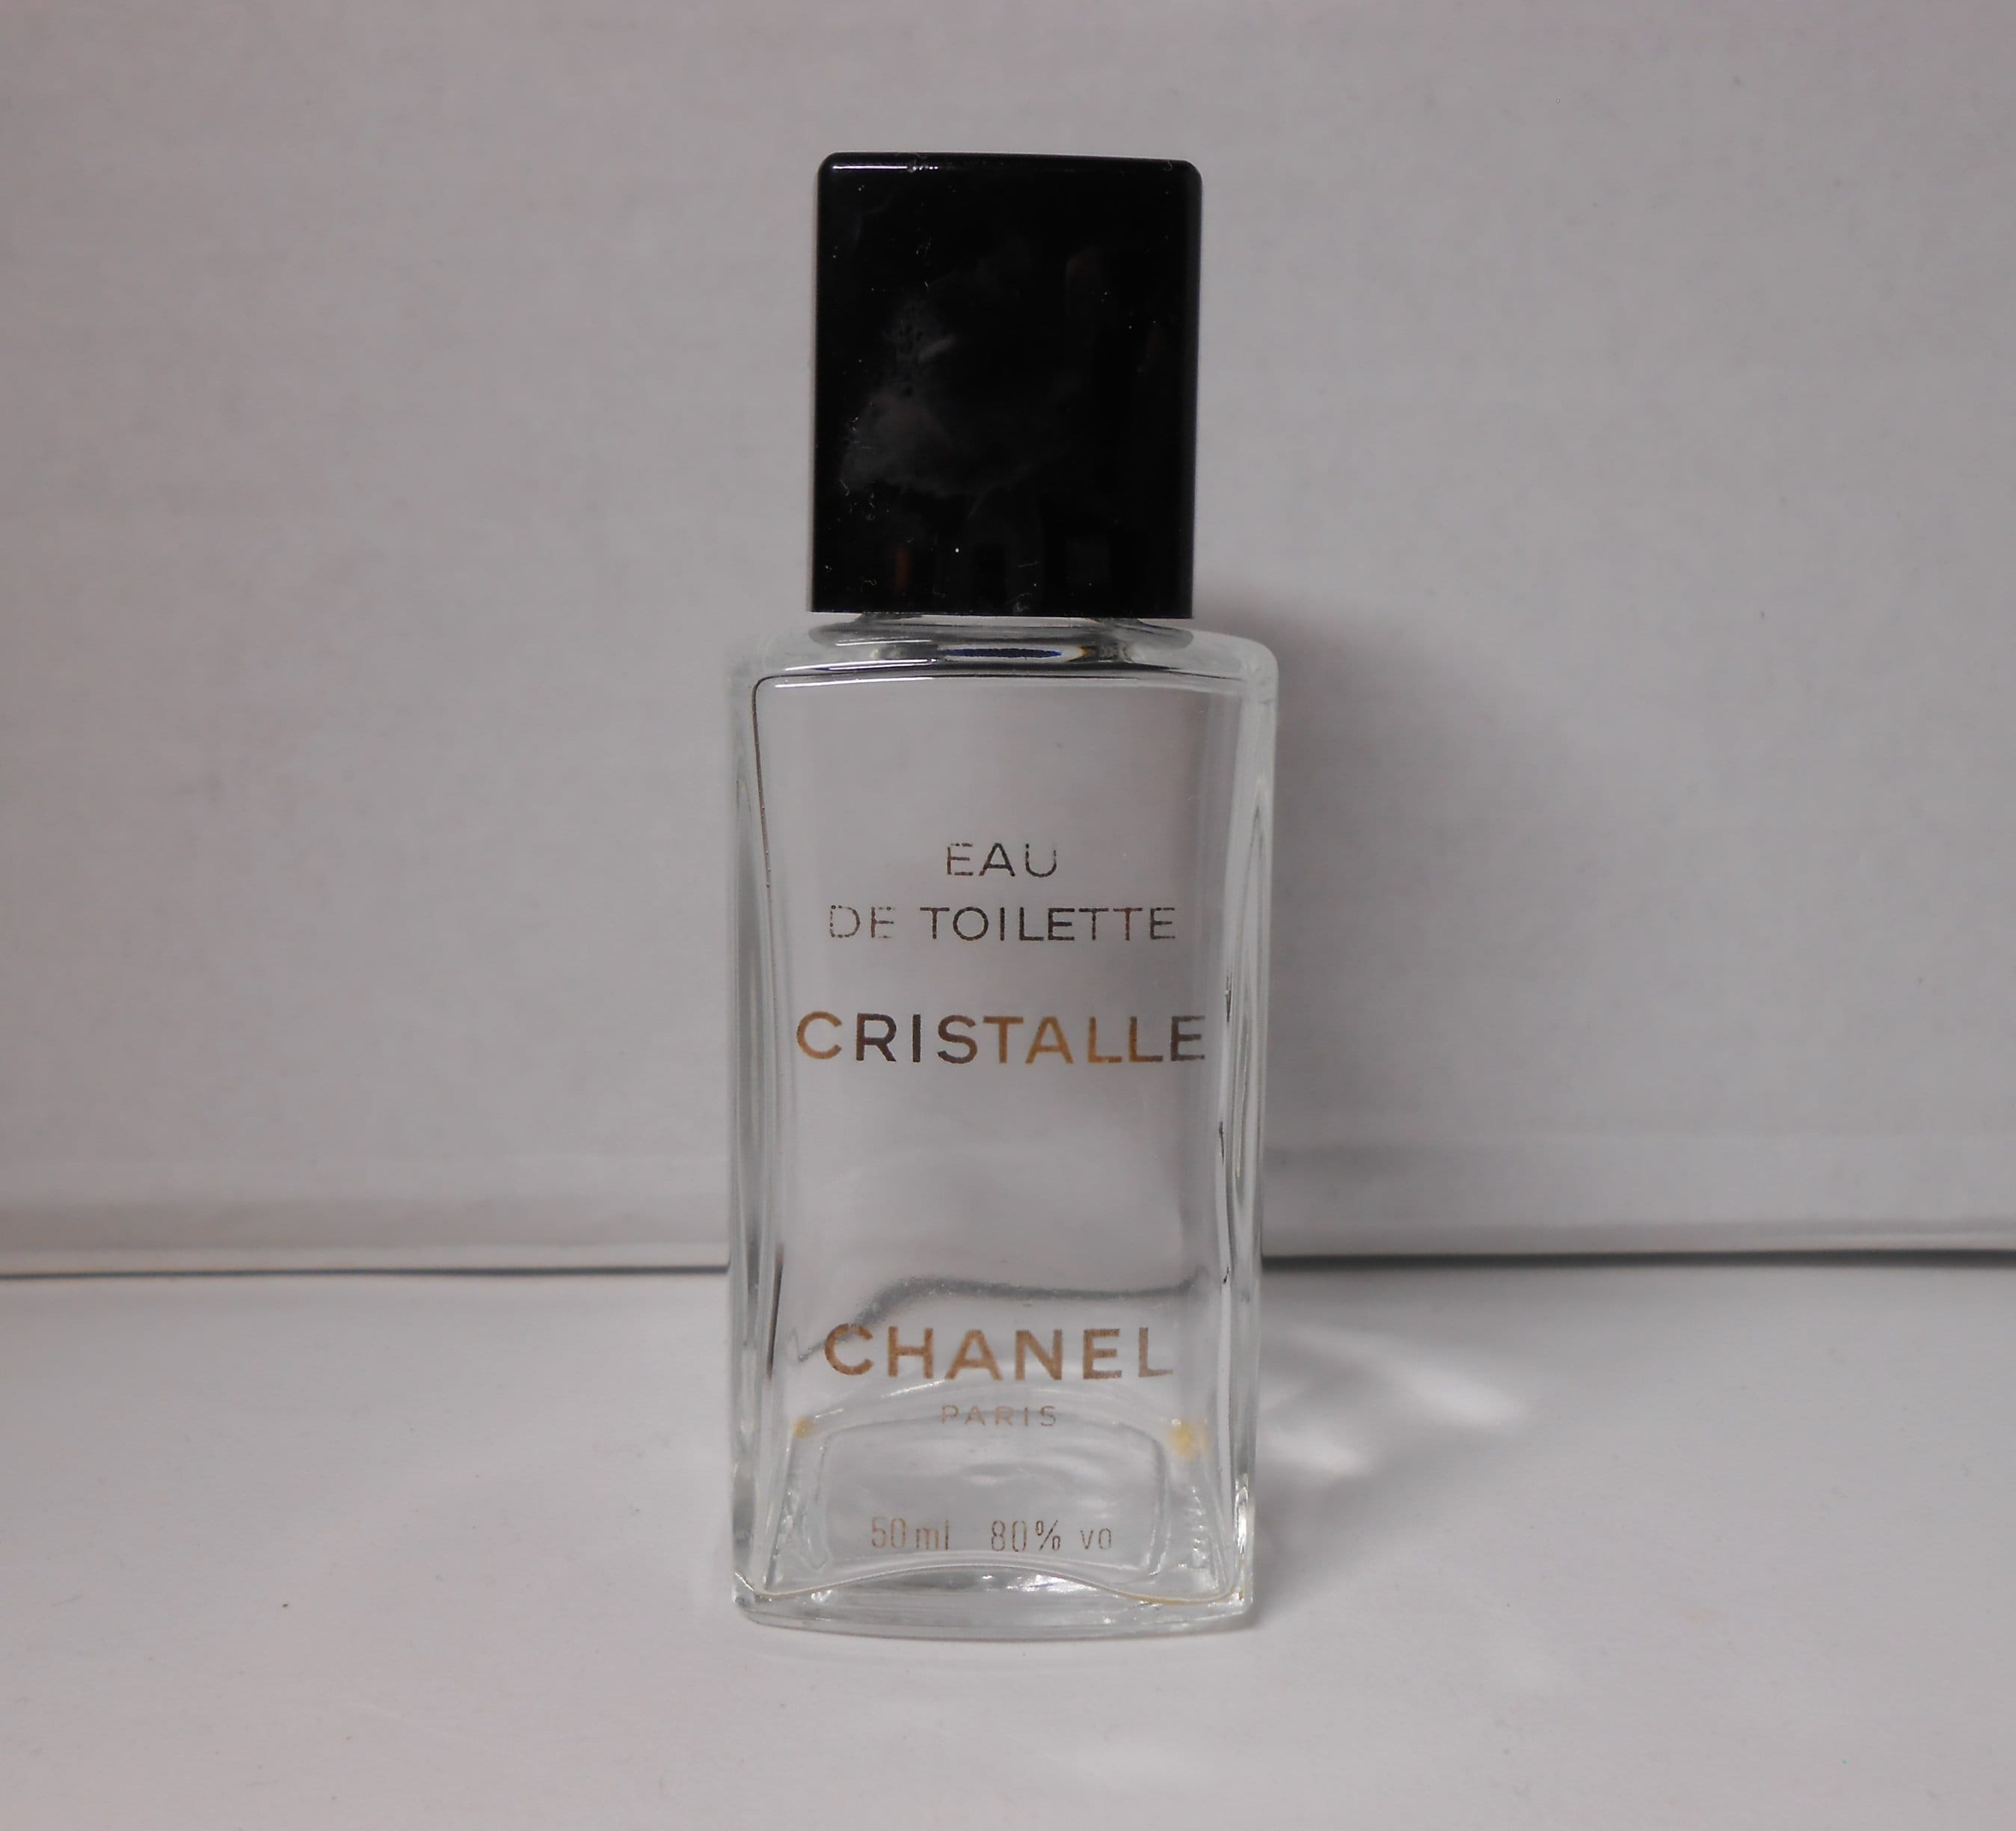 Vintage Perfume Bottle Empty Perfume Bottle Cristalle Chanel -  Israel